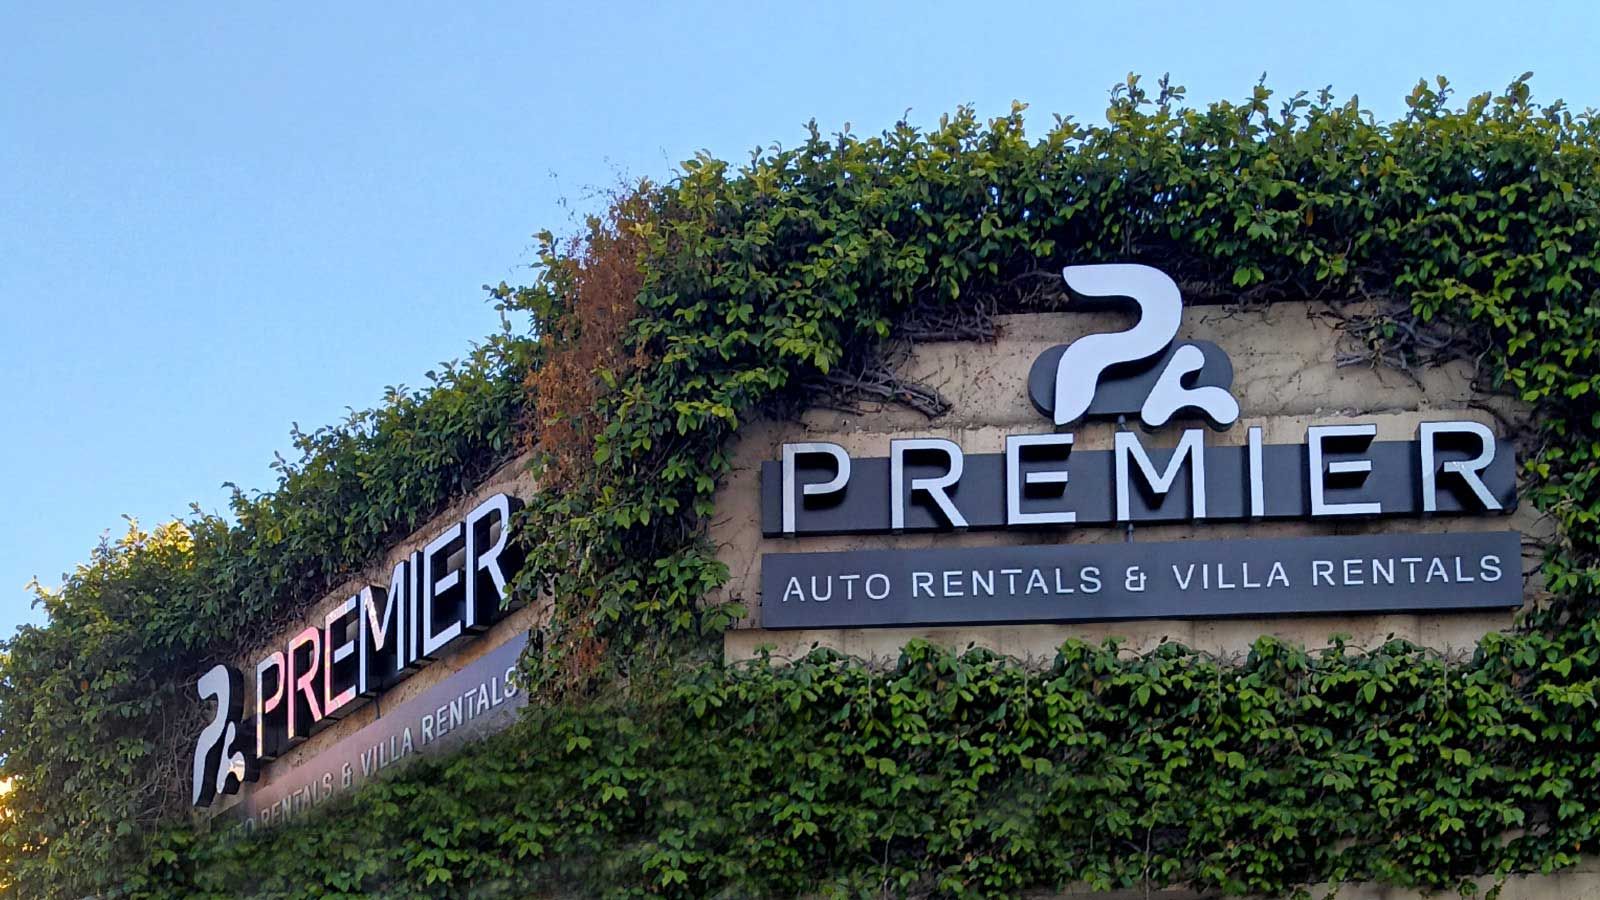 Premier Auto Rentals outdoor sign